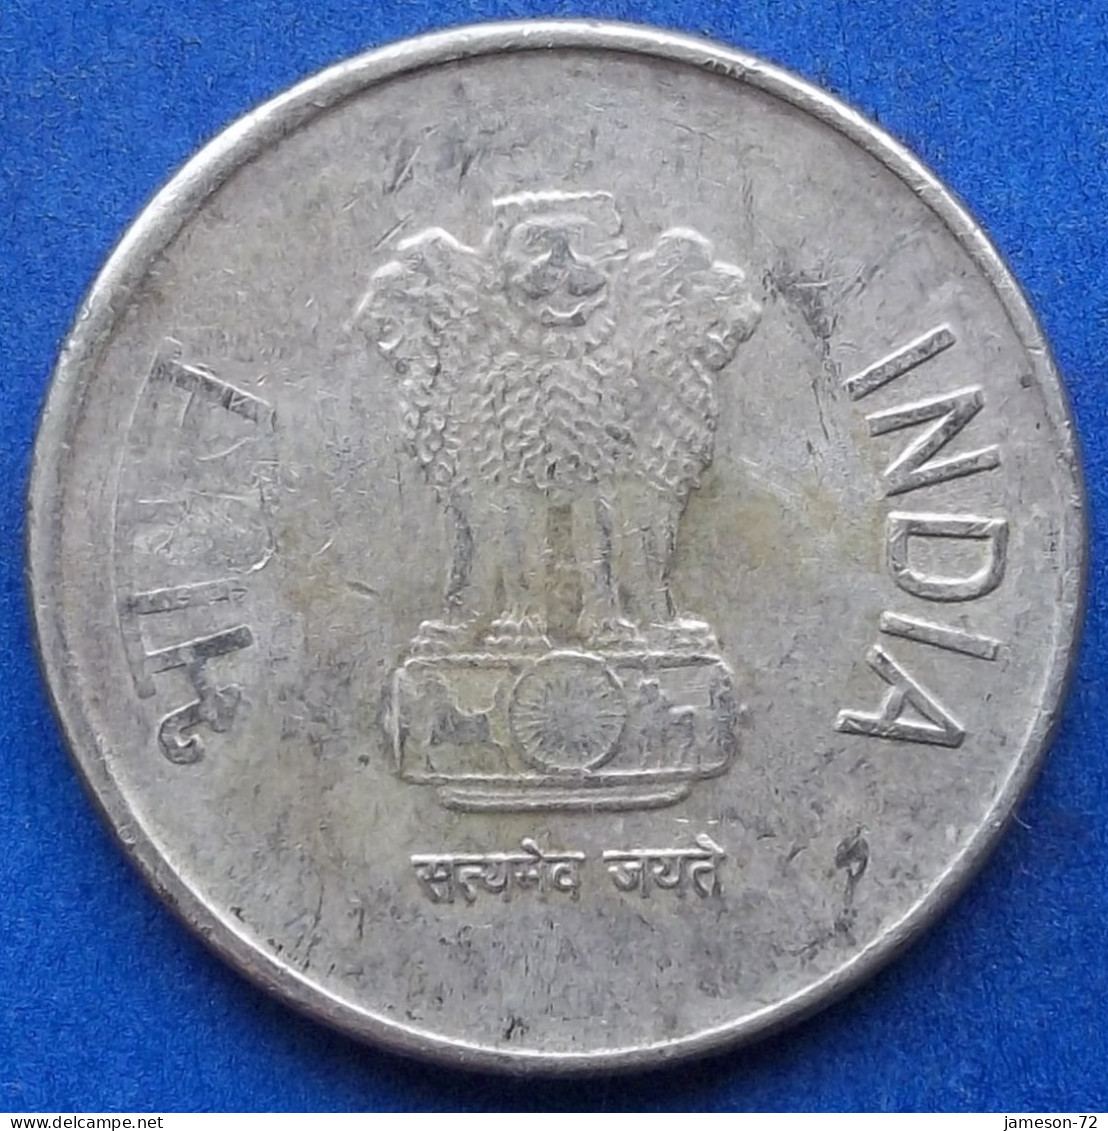 INDIA - 5 Rupees 2016 "Lotus Flowers" KM# 399.1 Republic Decimal Coinage (1957) - Edelweiss Coins - Géorgie